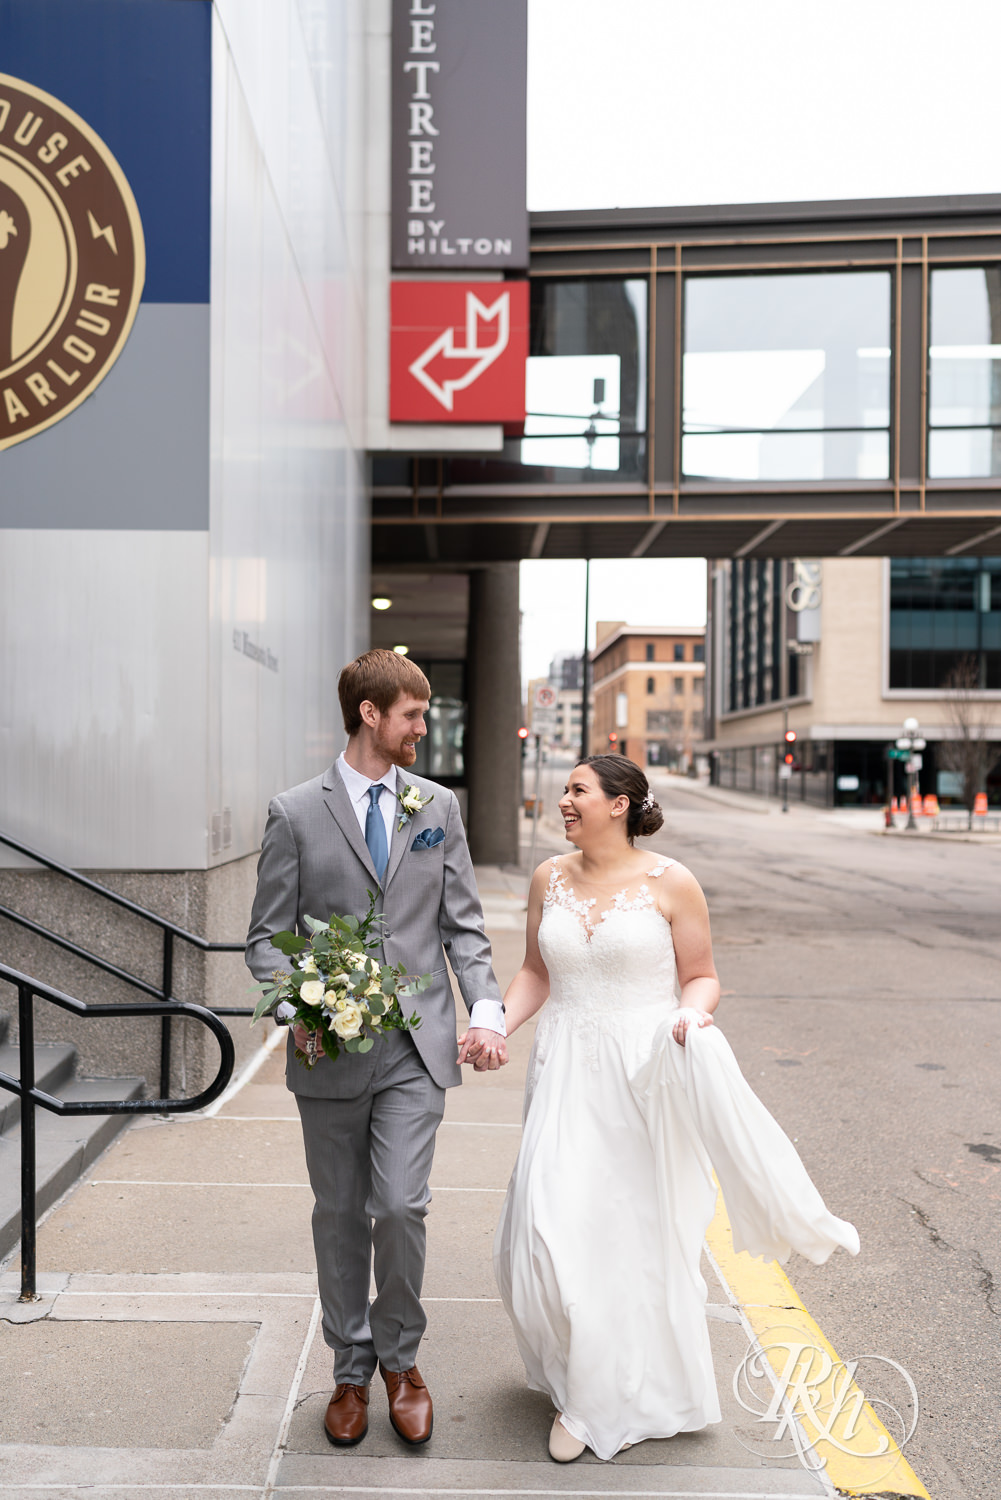 Bride and groom smile while walking down the street in Saint Paul, Minnesota.